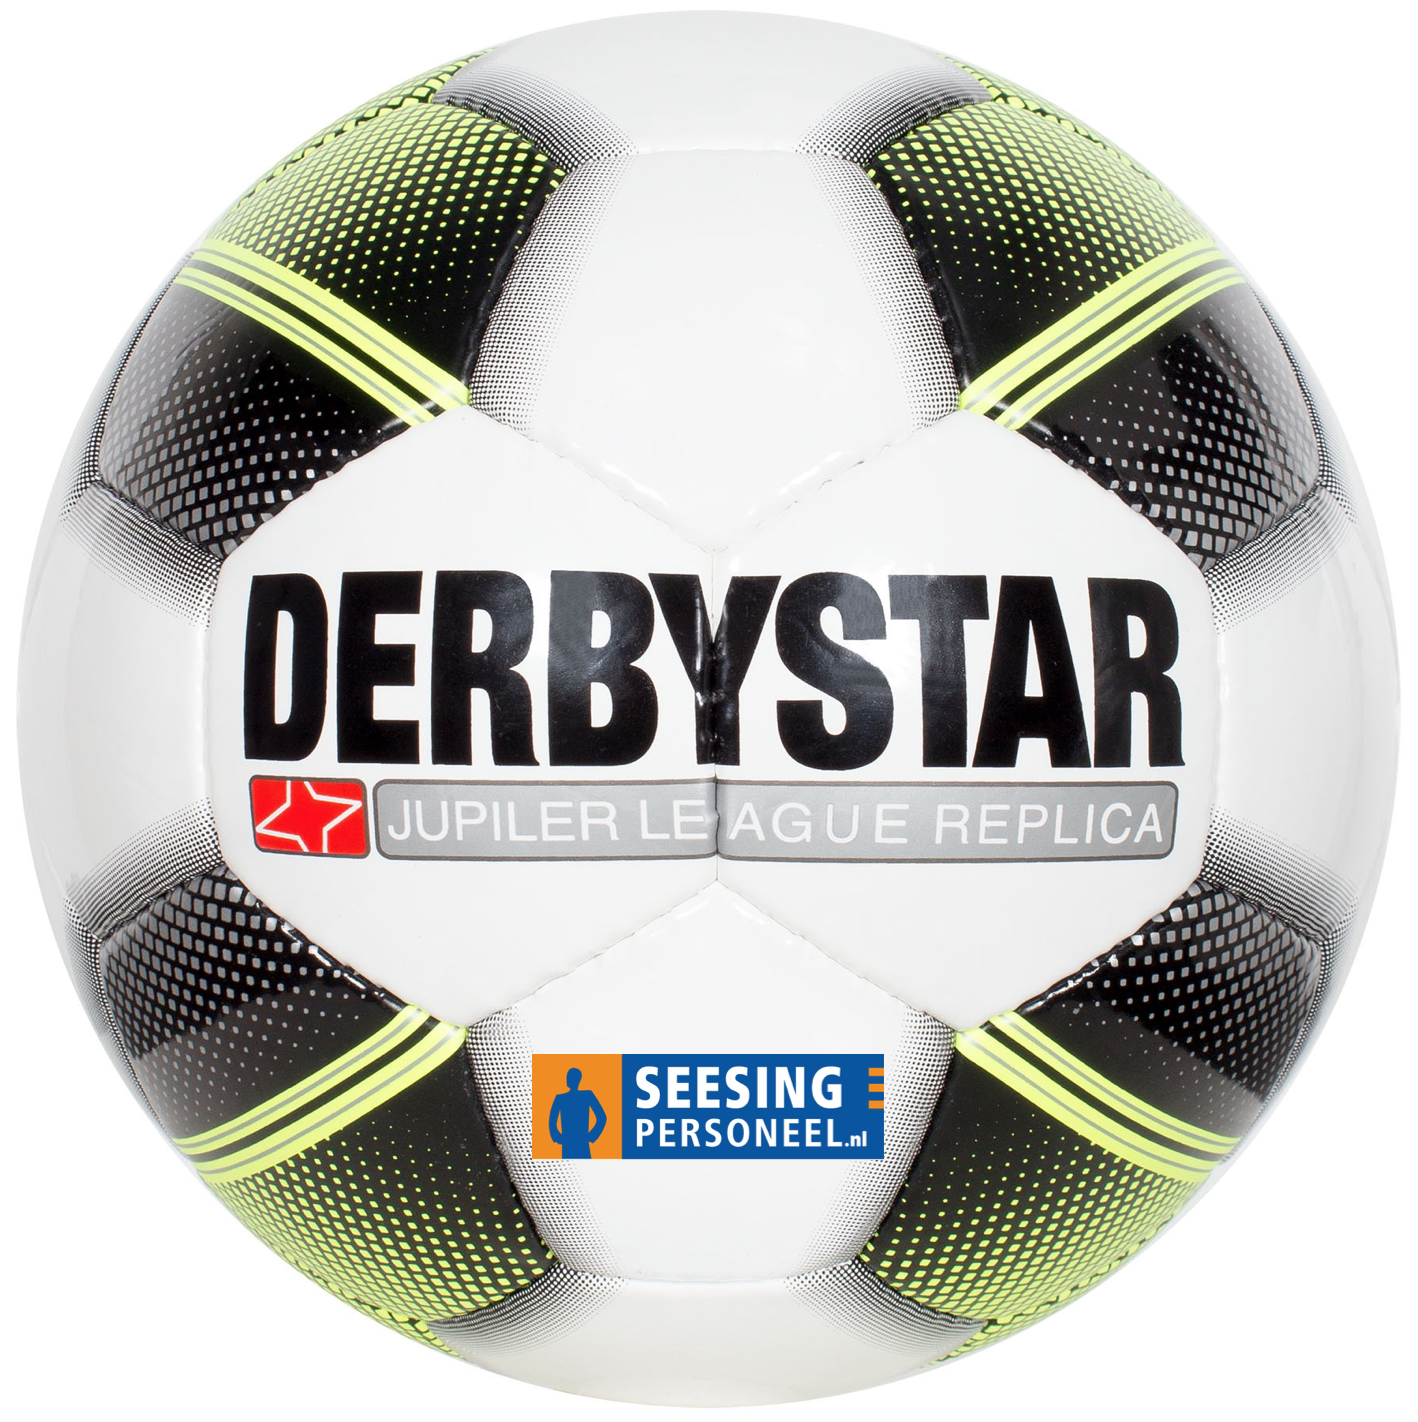 Derbystar-Jupiler-League-bal-20172018-Logo-Seesing-Personeel.png